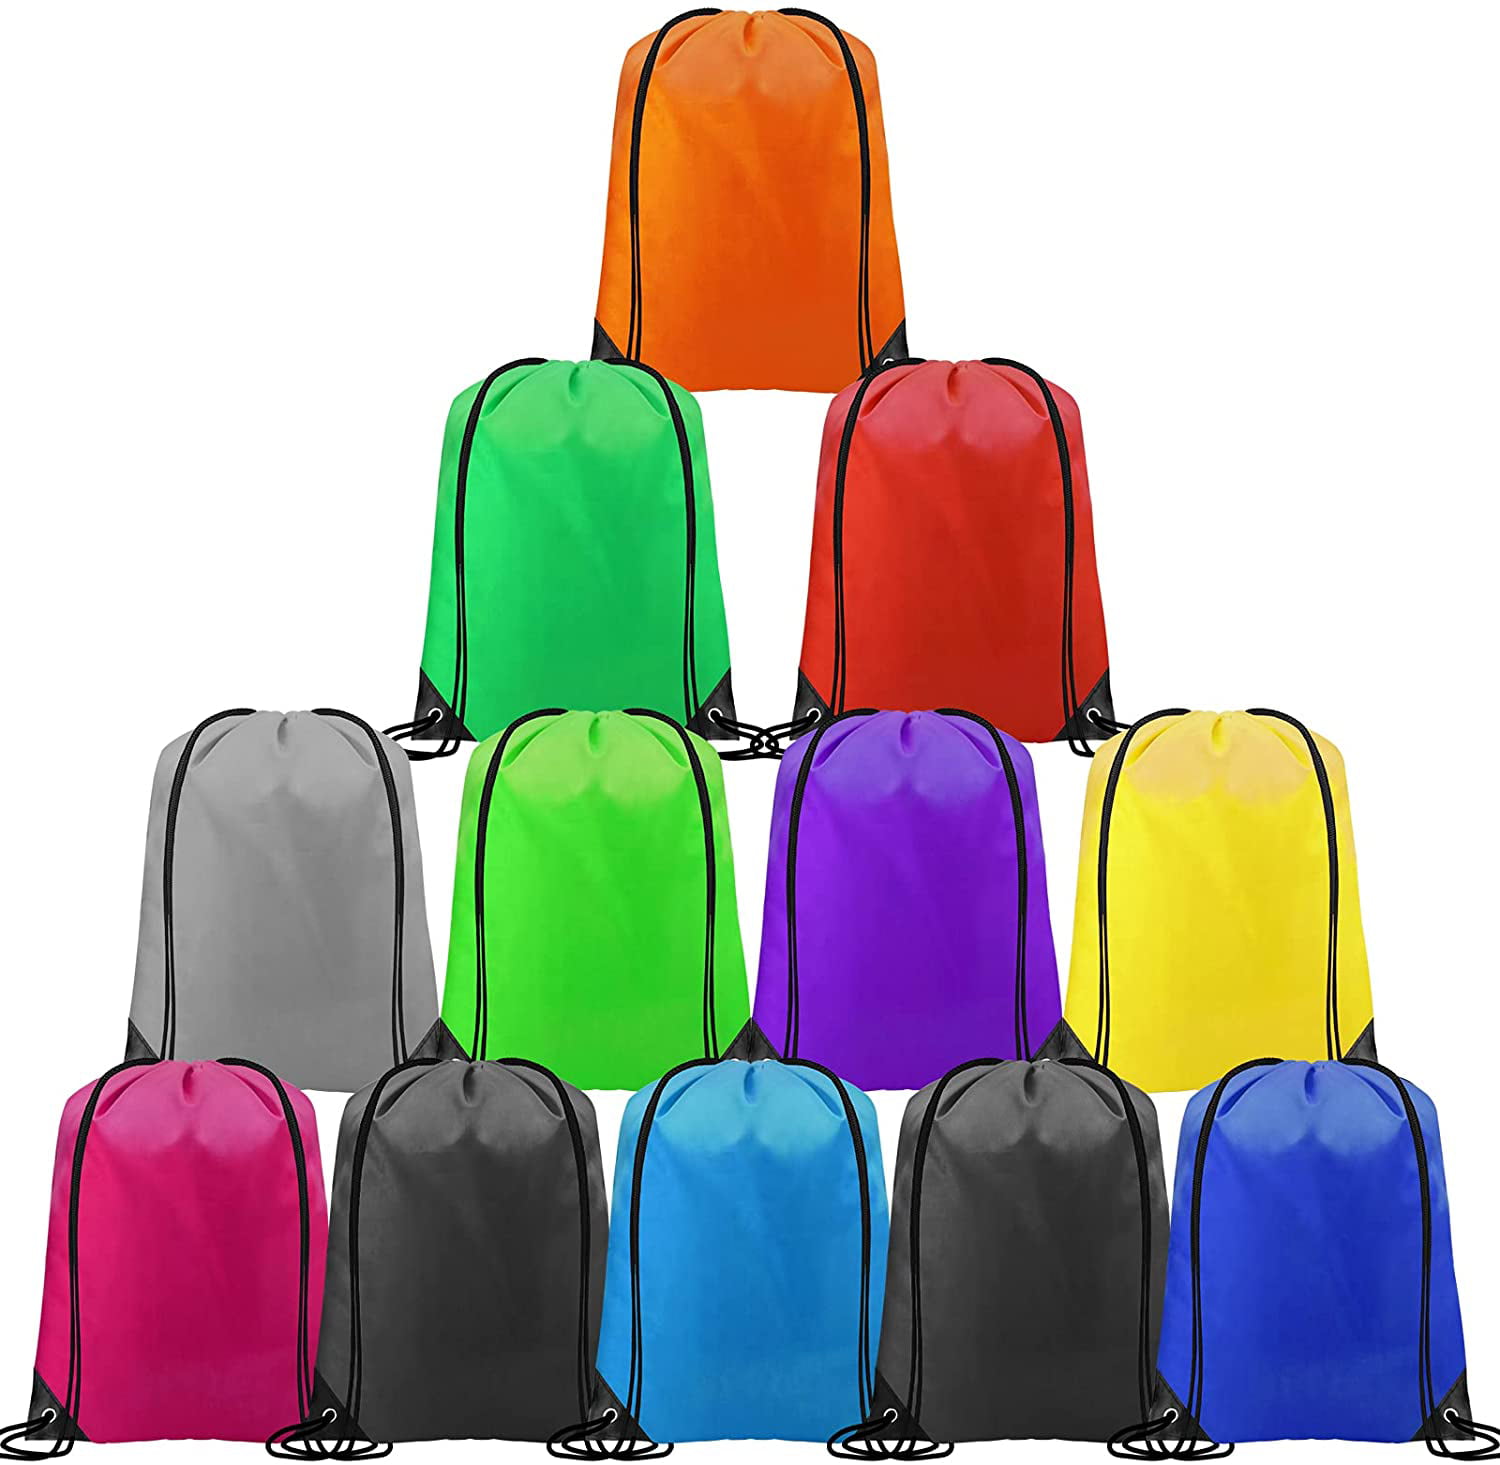 CHEPULA Drawstring Backpack Bags Cinch Sacks String Portable Backpack for School,Travel,Sports&Storage